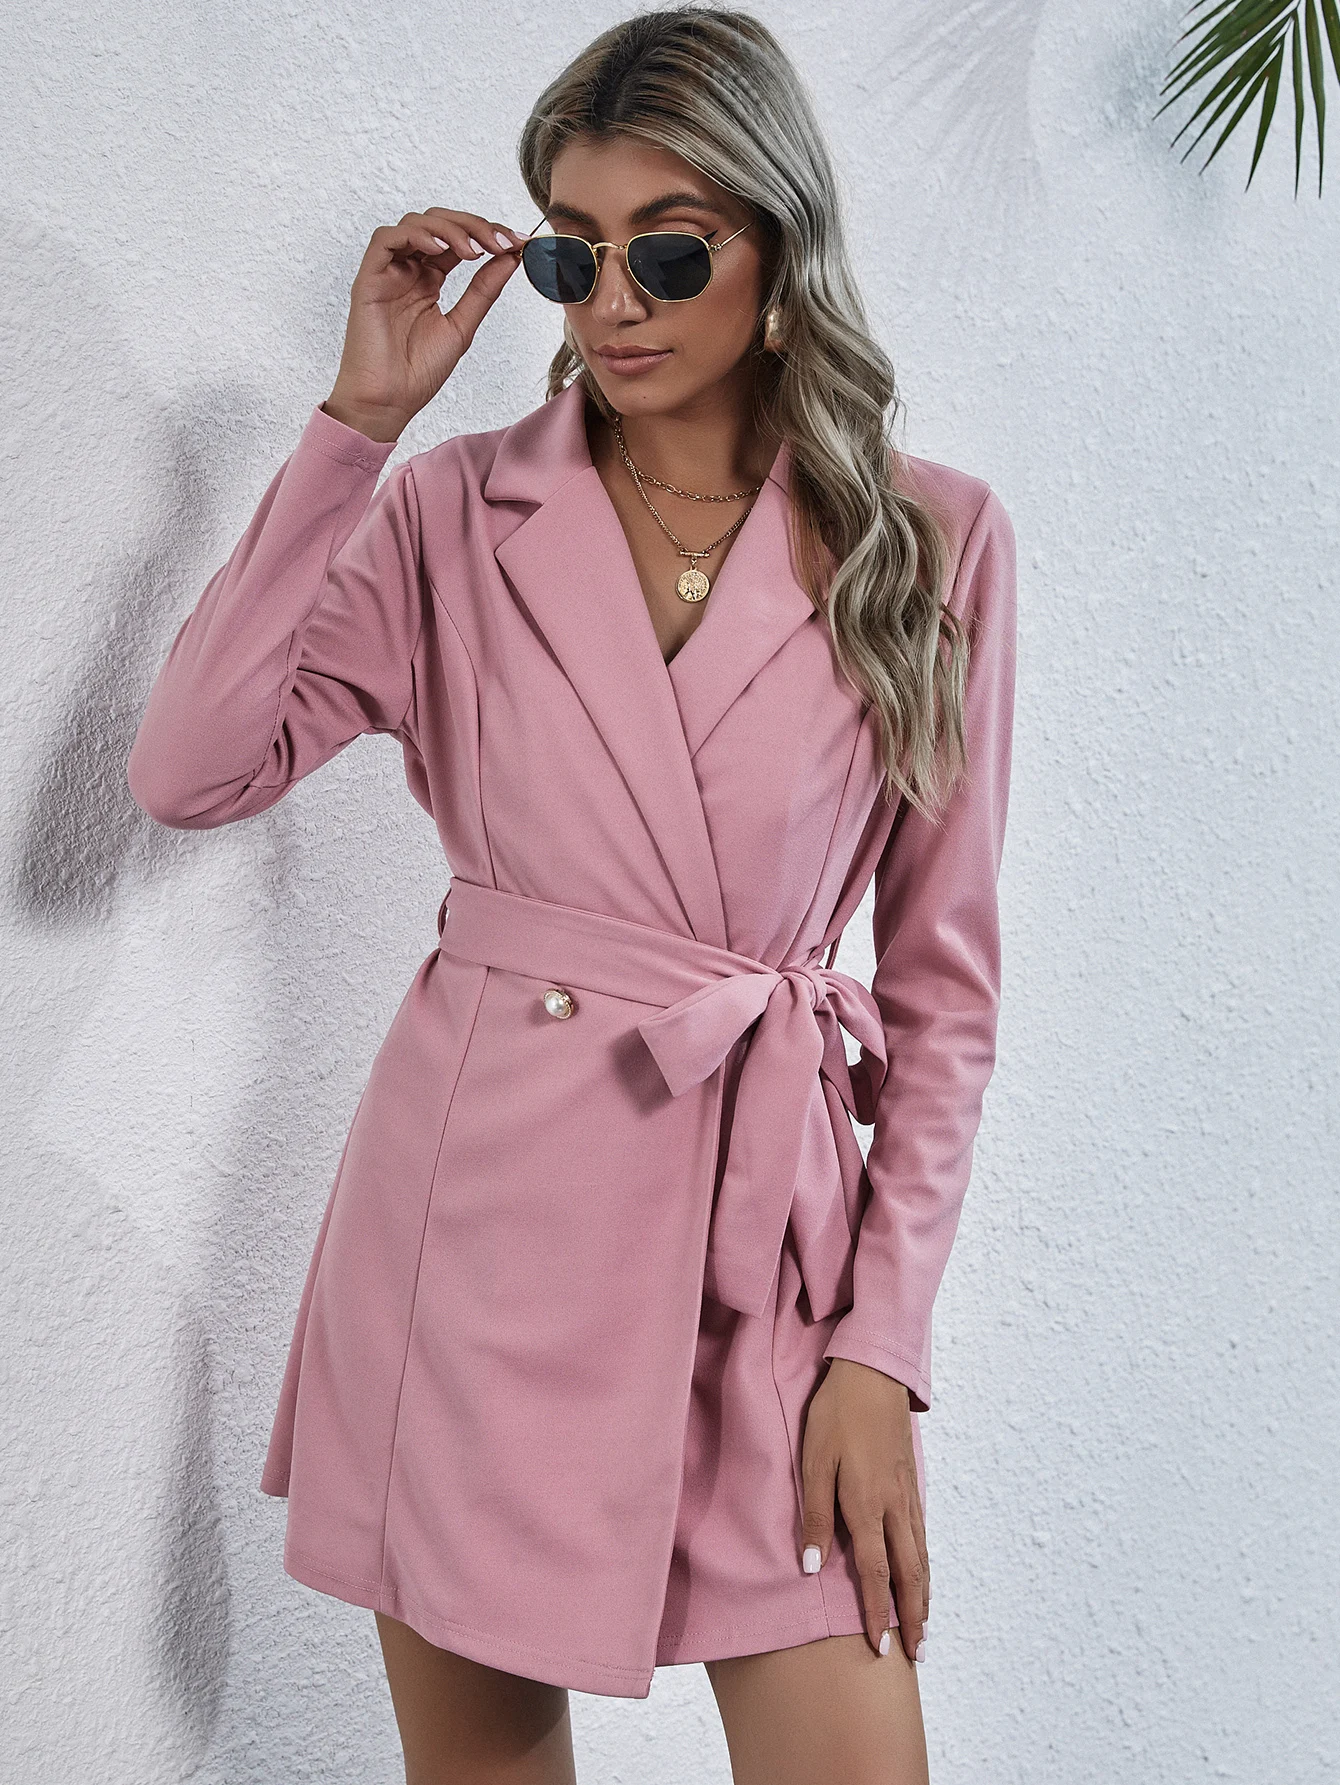 2021 new trendy mature pink dress Korean style strappy mini open collar long sleeve fashion dress